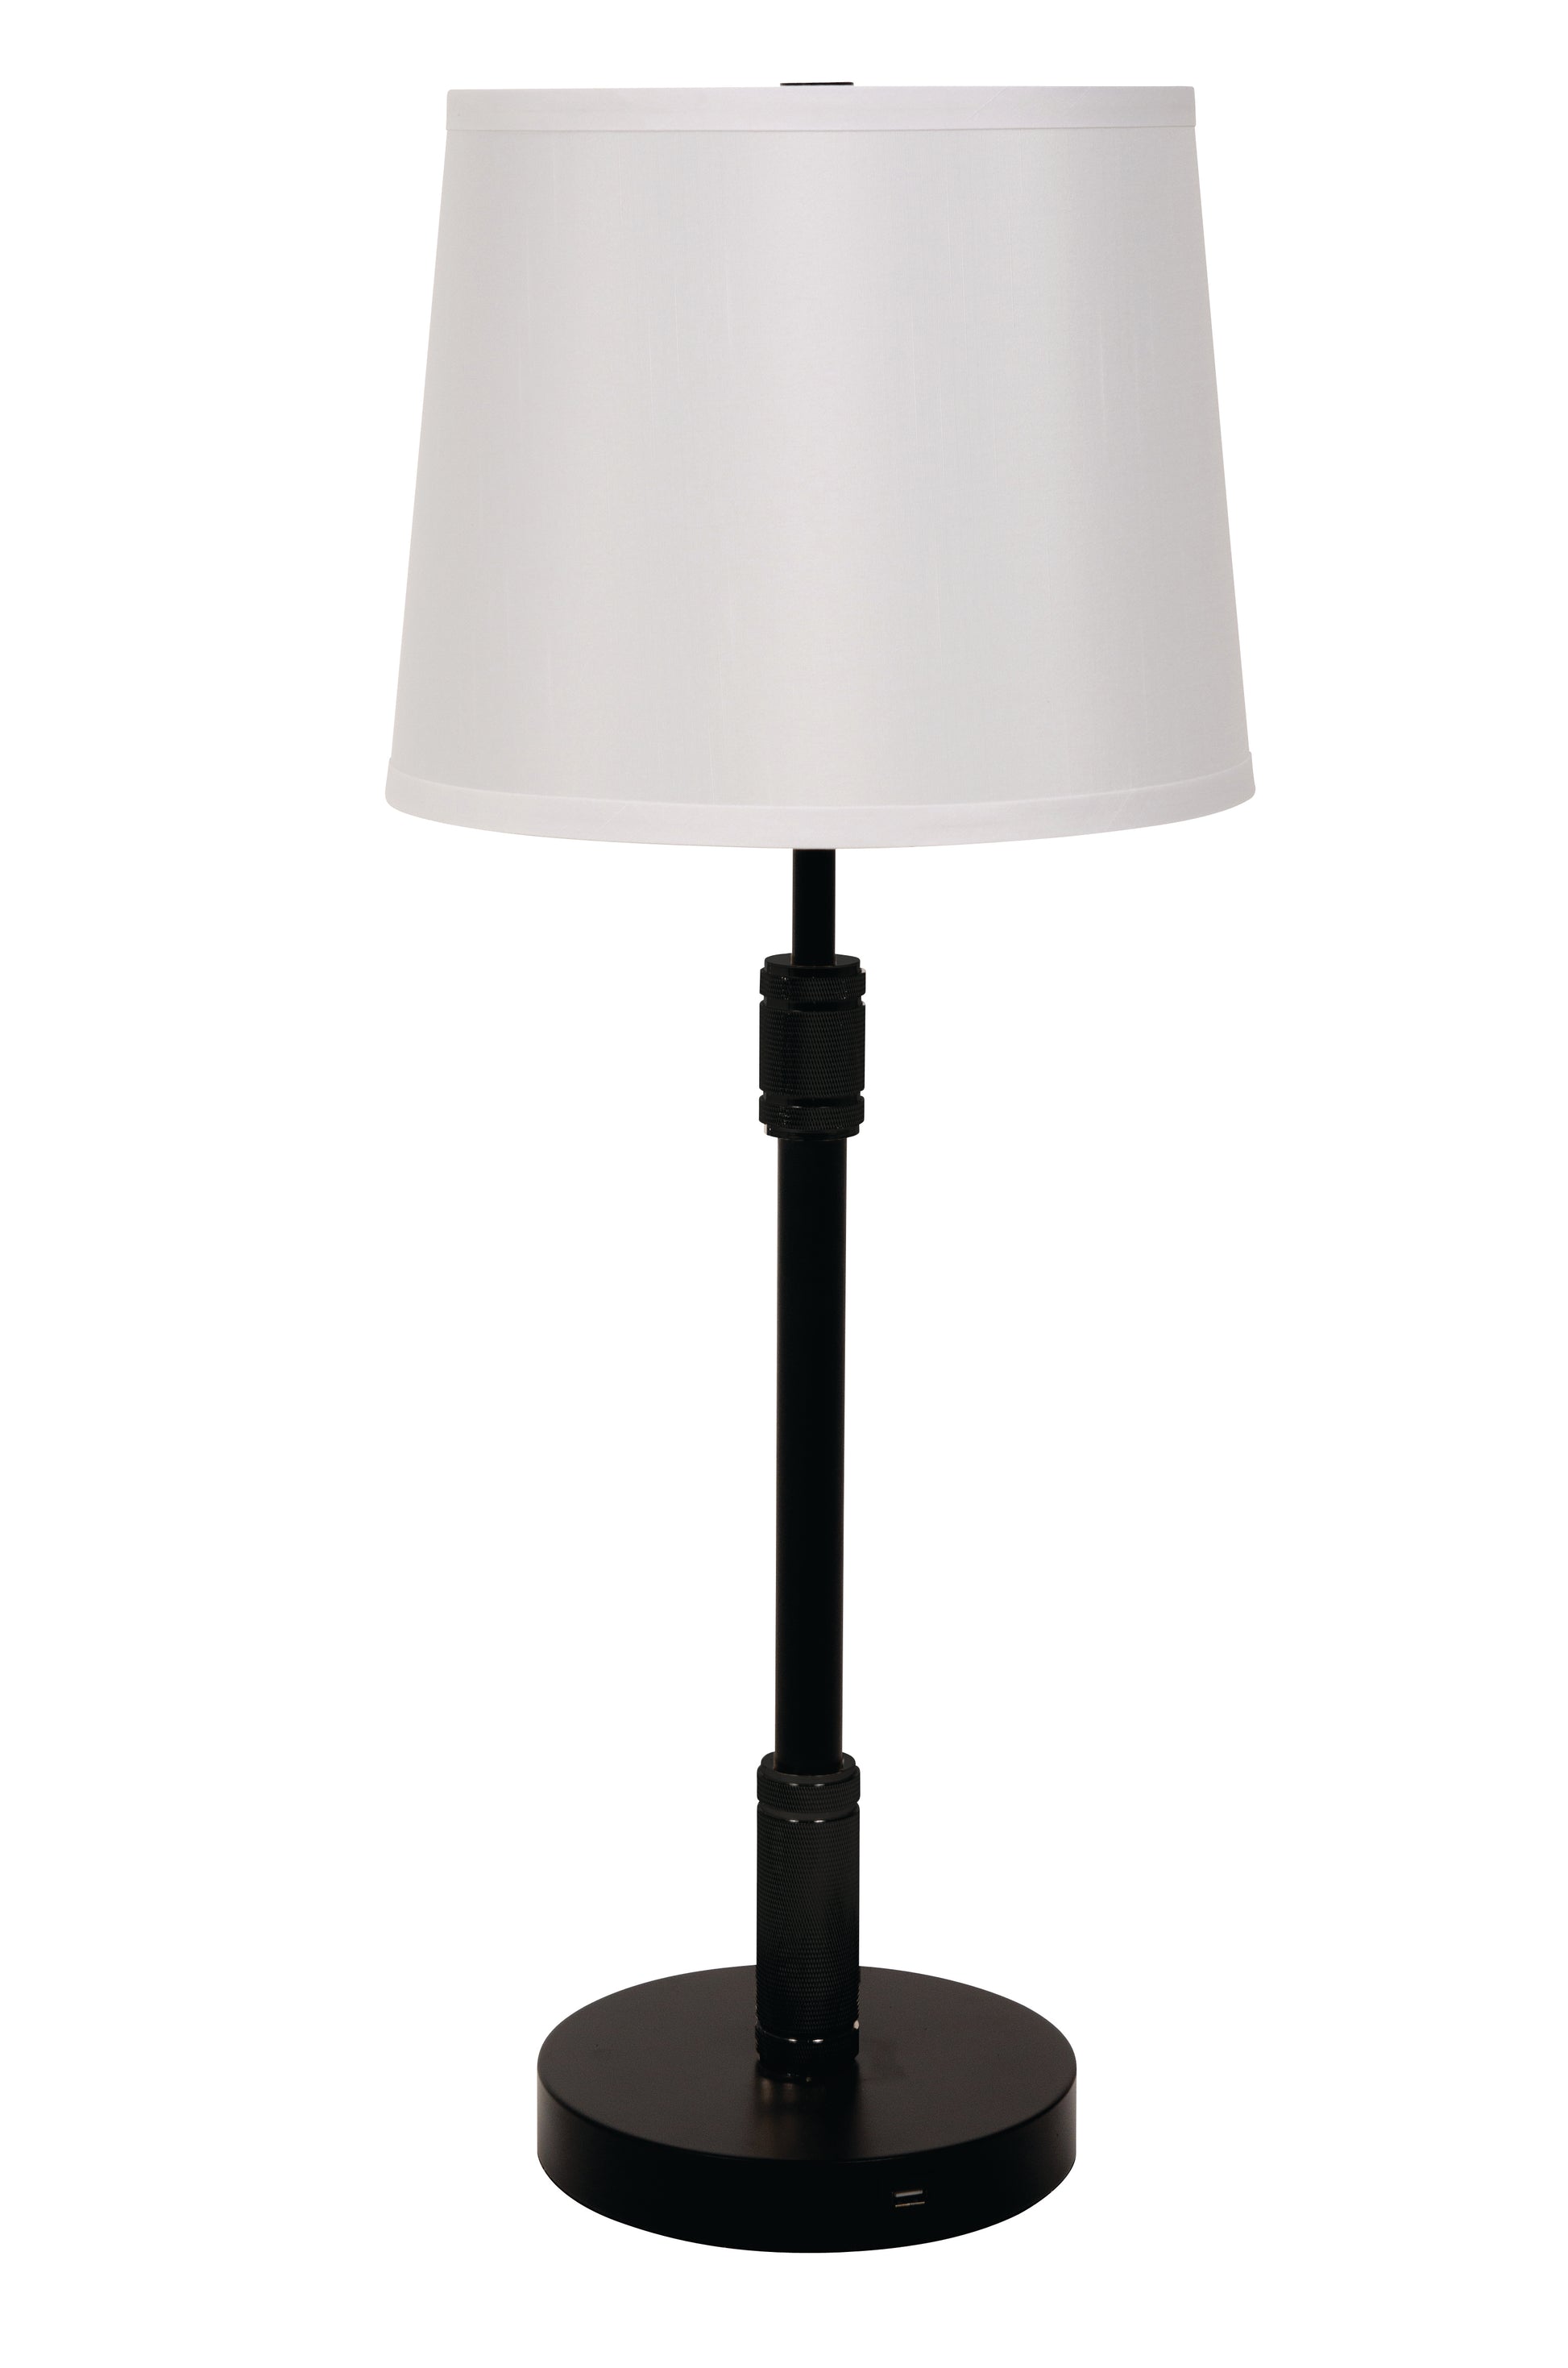 House of Troy Killington Black table lamp with USB port and hardback shade KL350-BLK